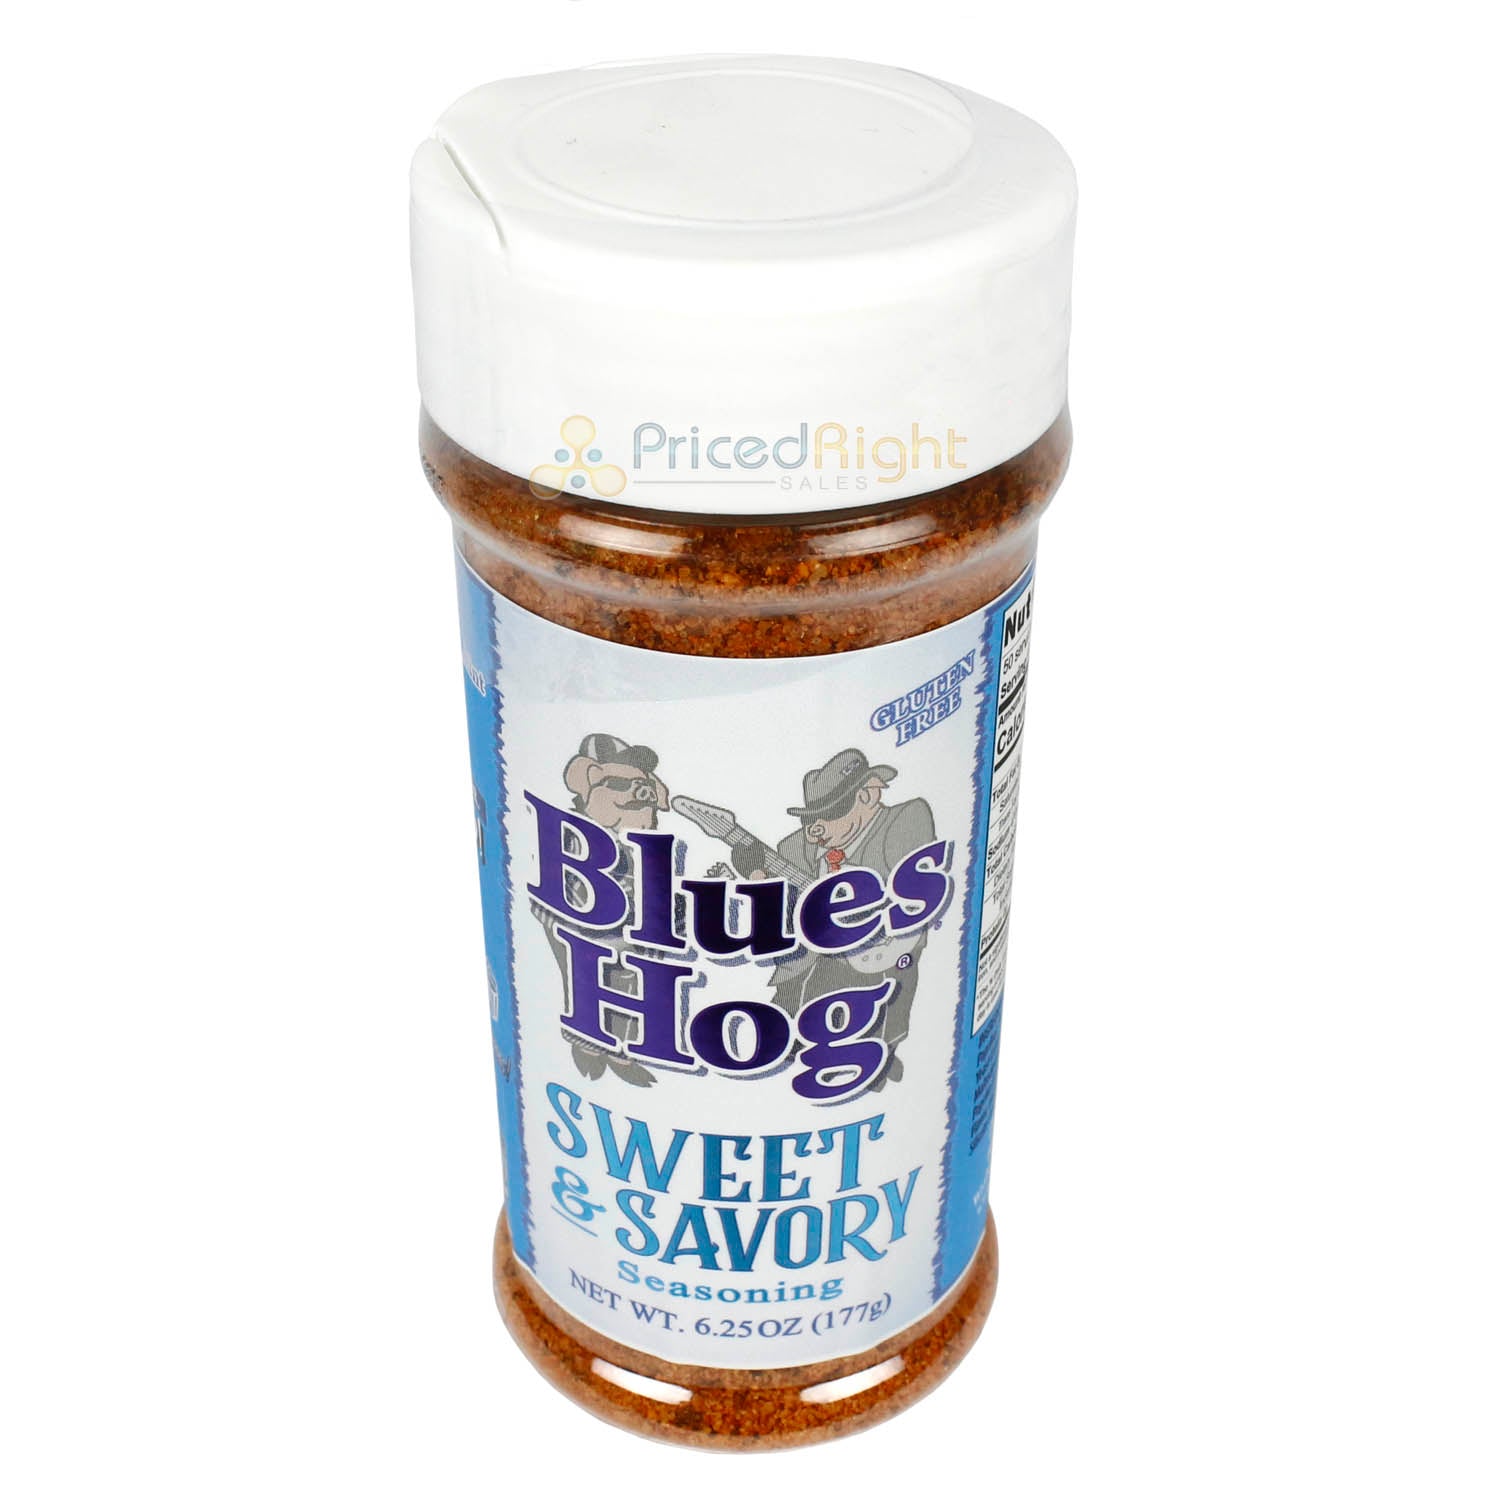 Blues Hog Sweet & Savory 6.25oz Seasoning Competition Rated Award Winning Choice